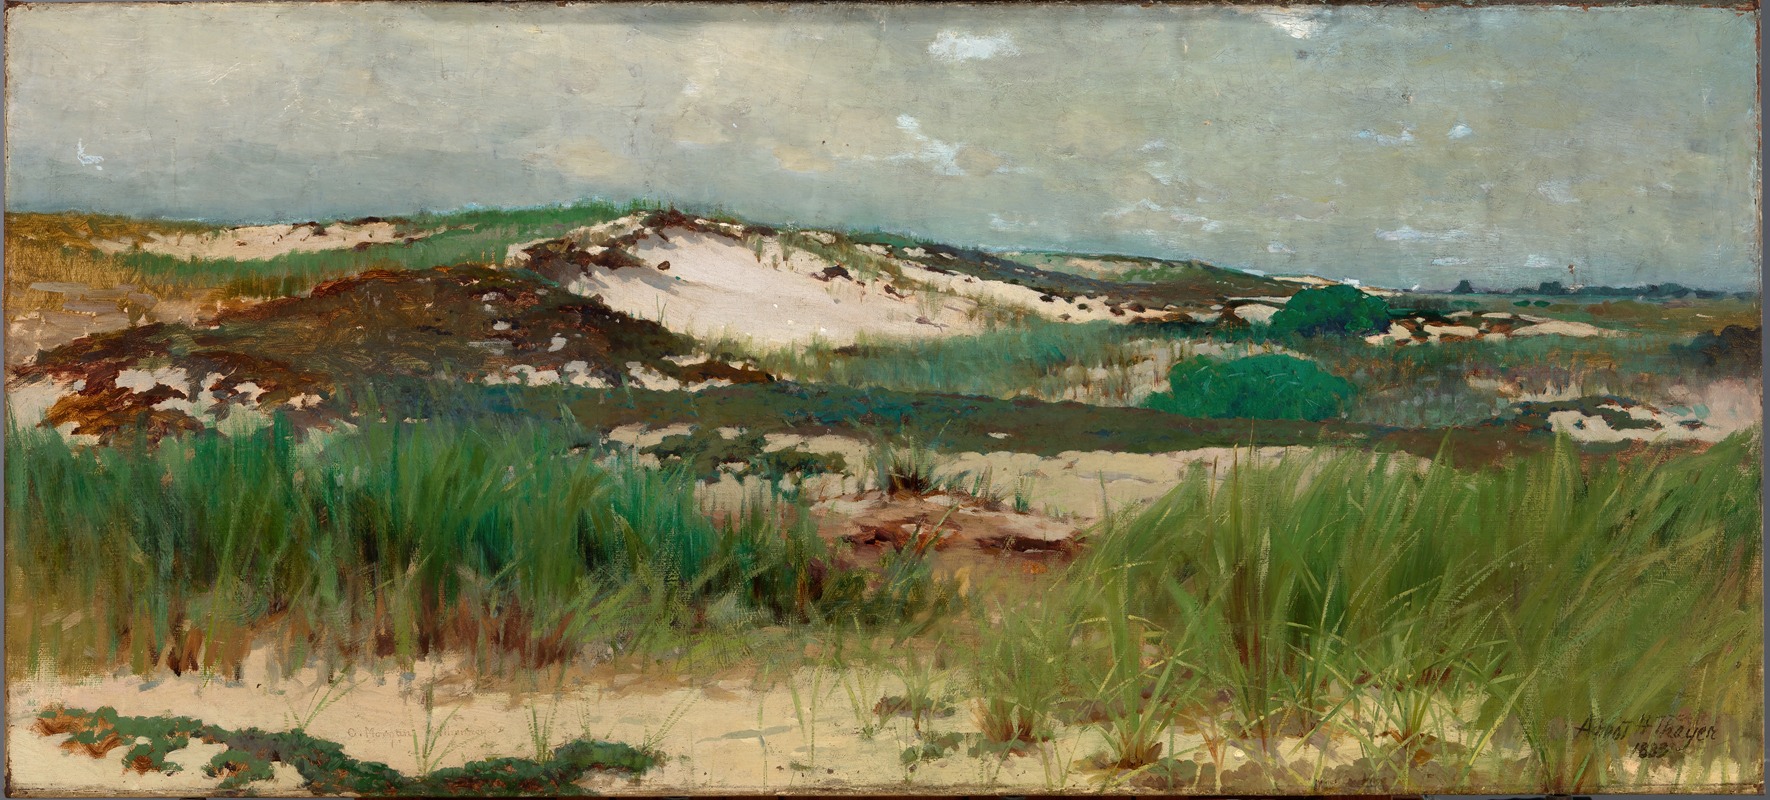 Charles Morgan McIlhenney - Nantucket Sand Dune